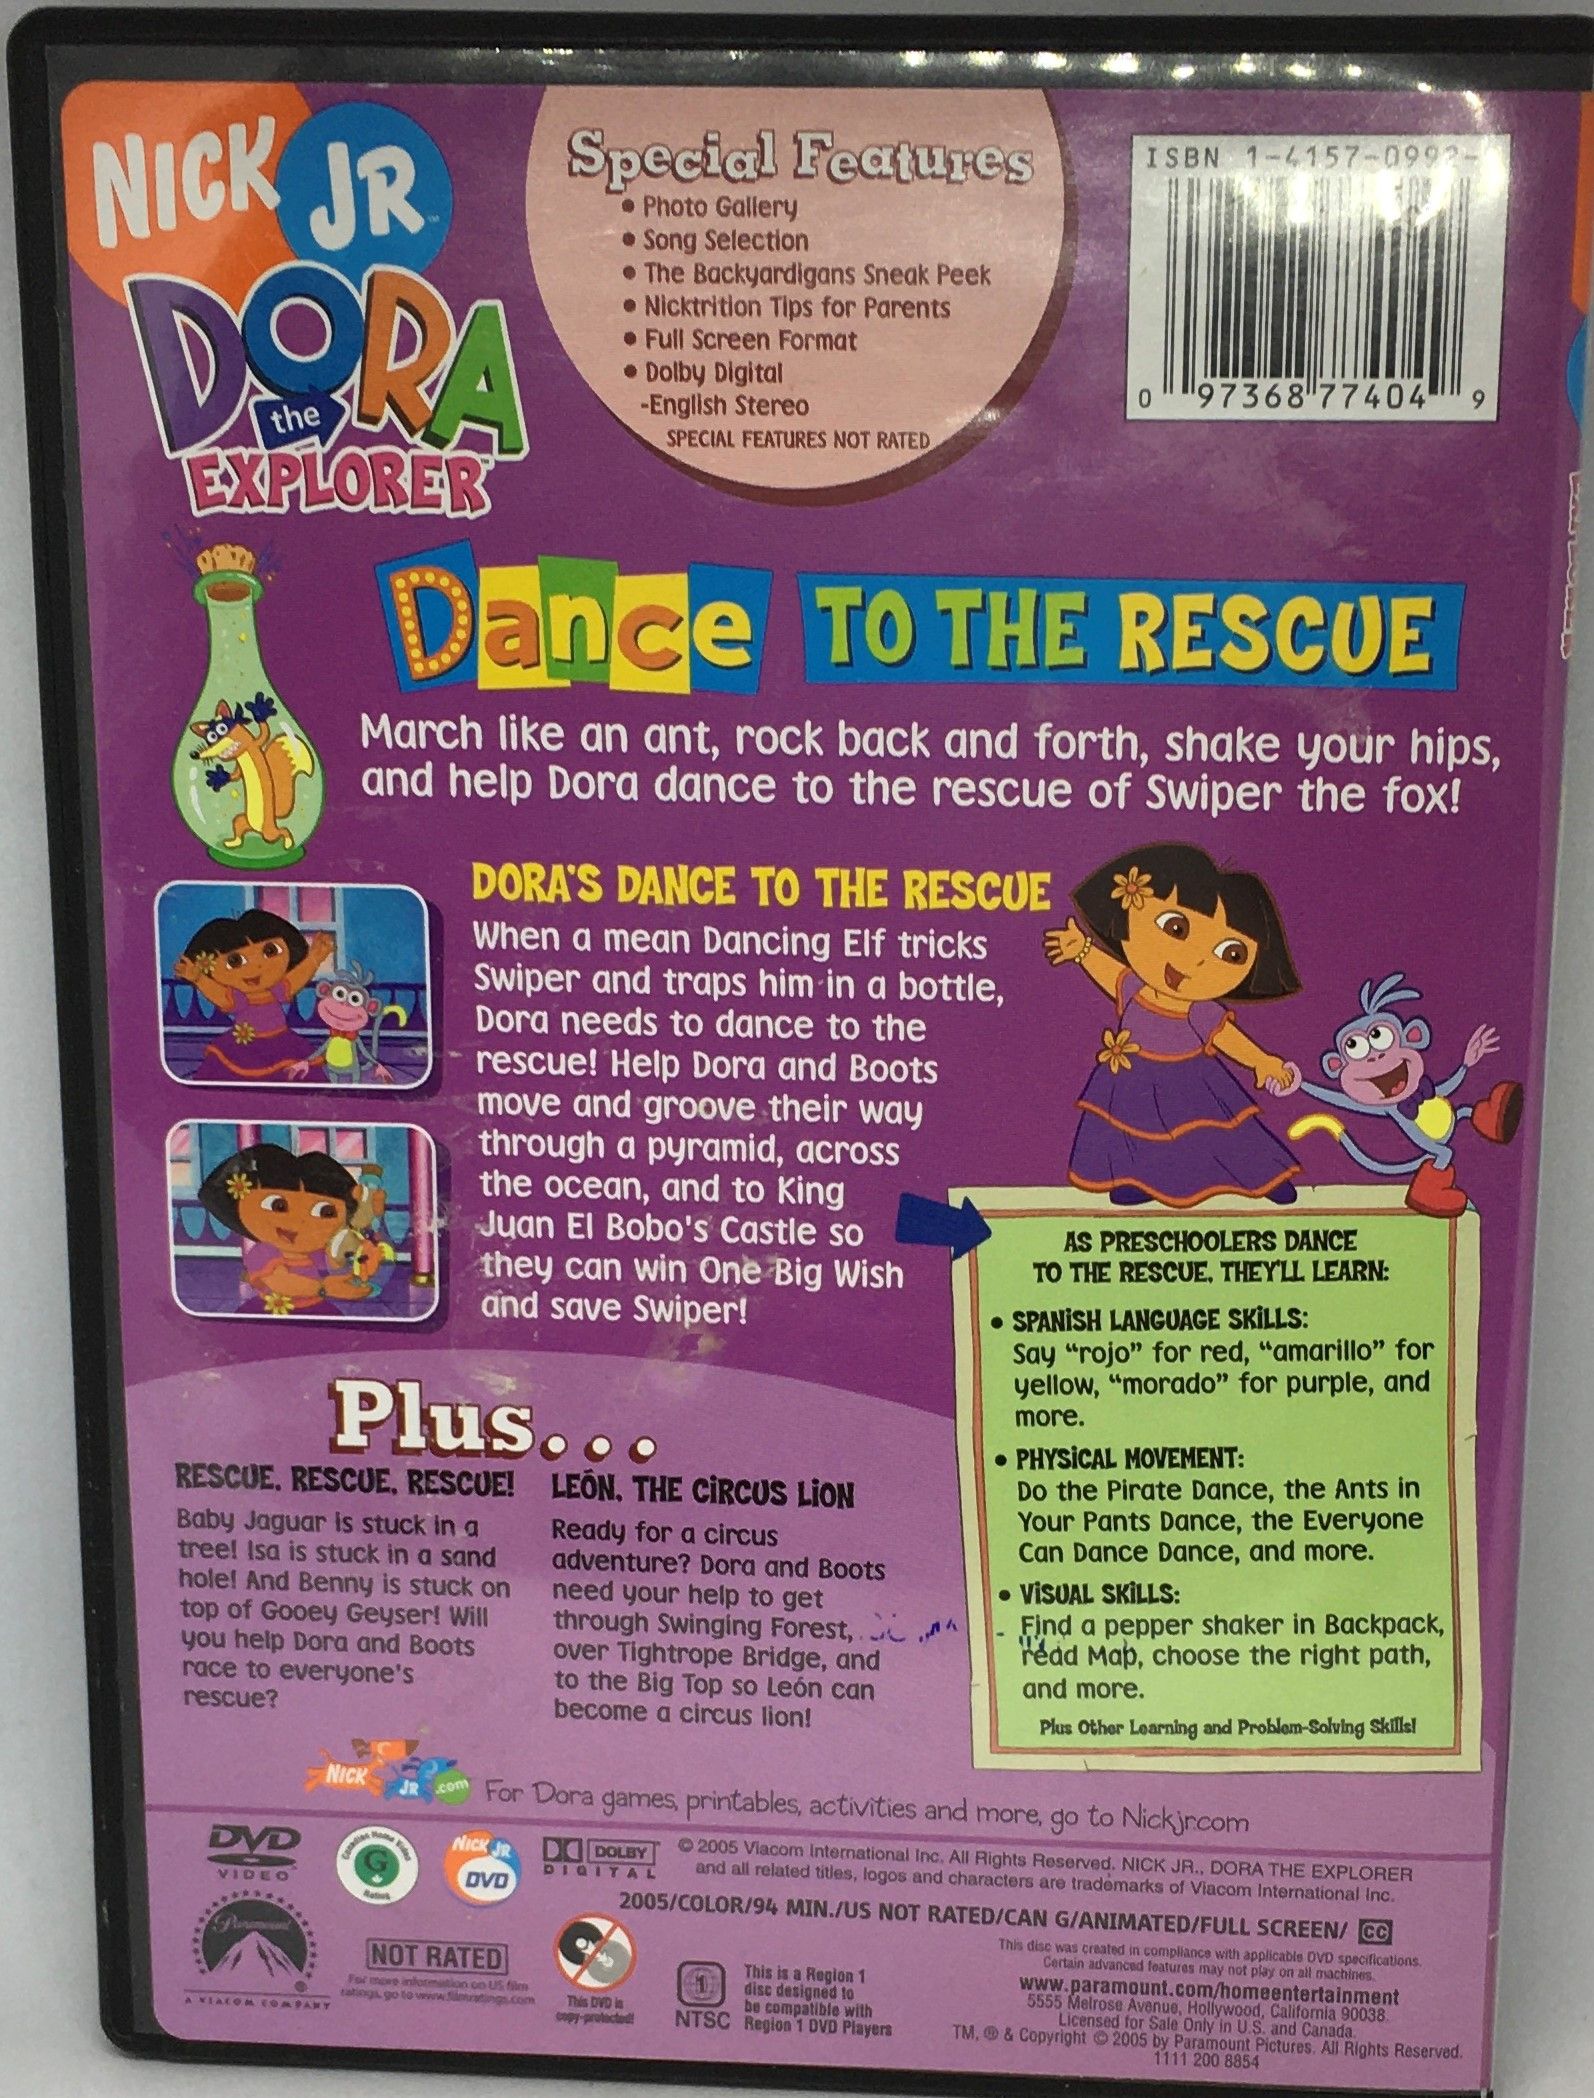 Dora the Explorer - Dance to the Rescue (DVD, 2005) 97368774049 | eBay